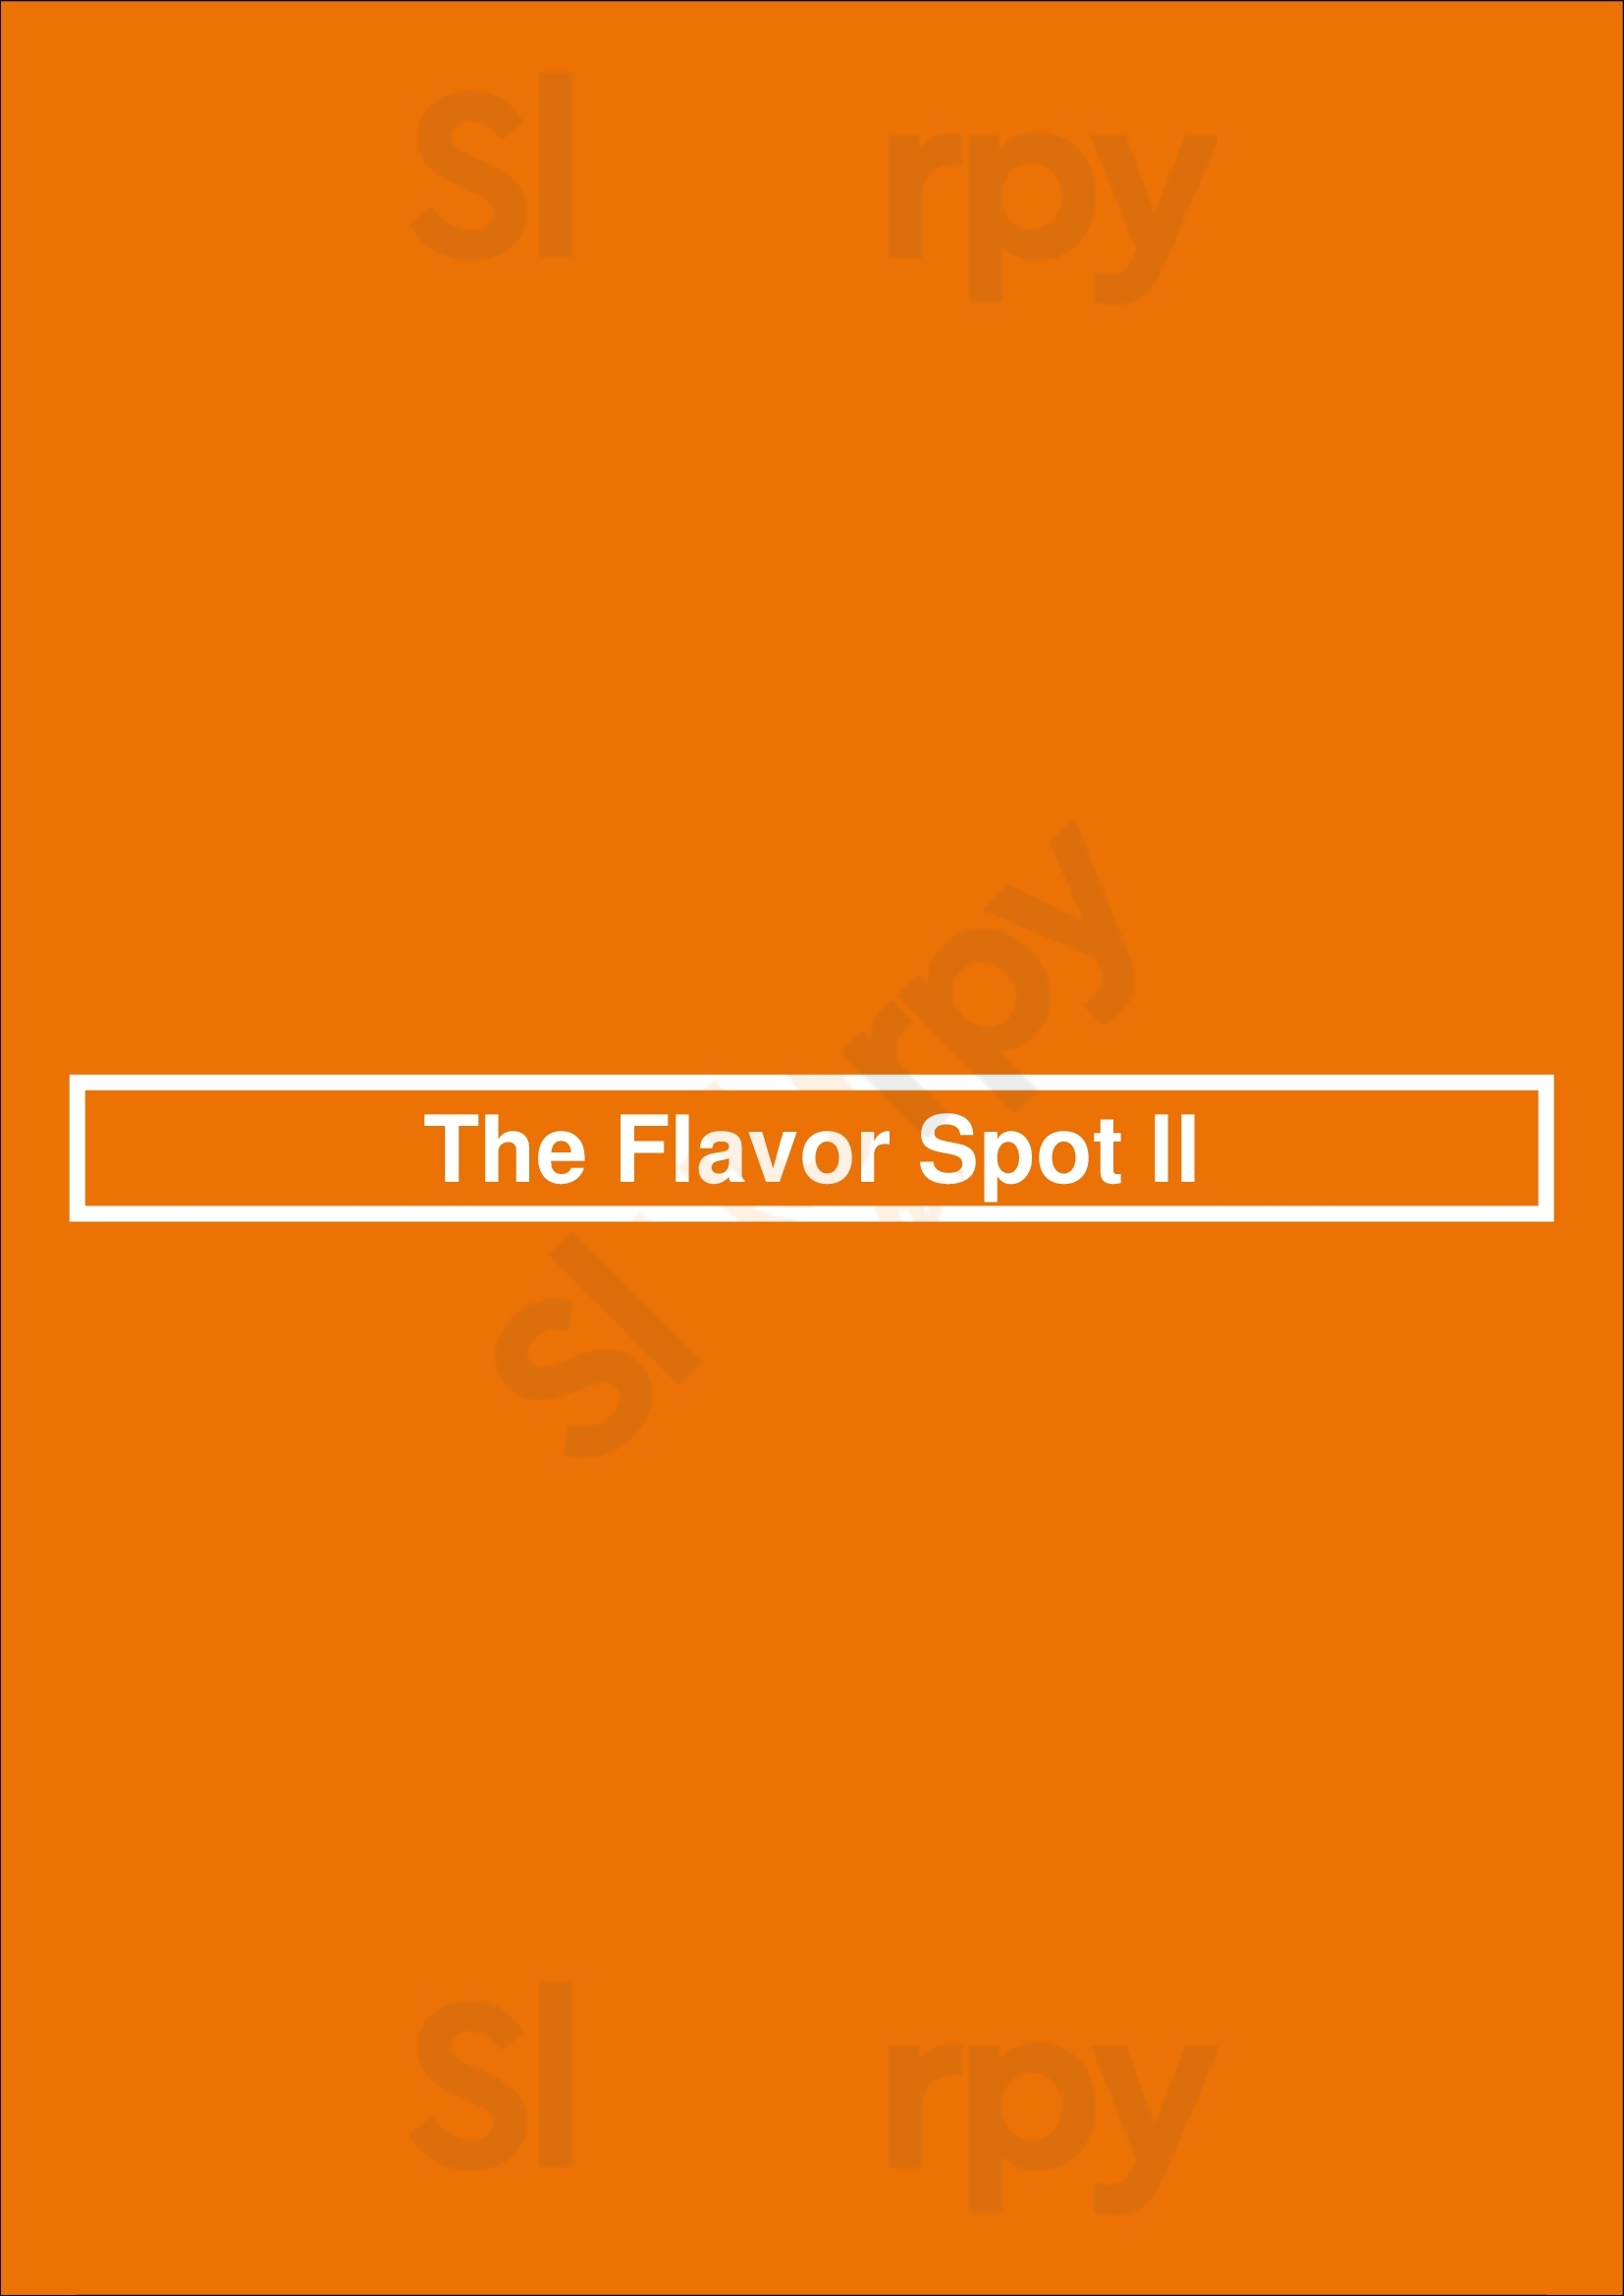 The Flavor Spot Ll Philadelphia Menu - 1